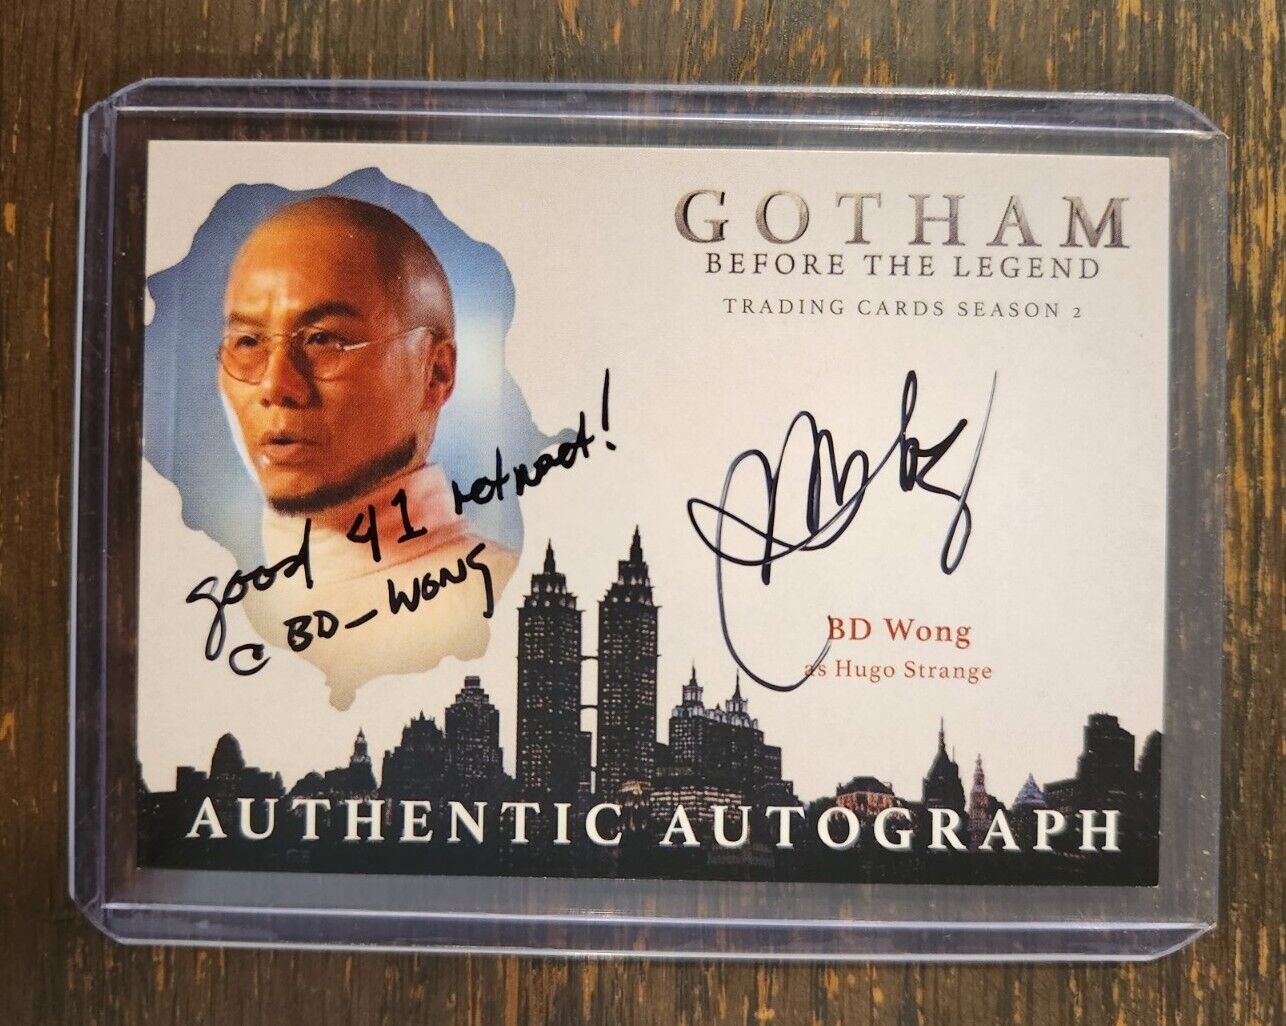 2017 Gotham Season 2 BD Wong as Hugo Strange Autograph With Inscription